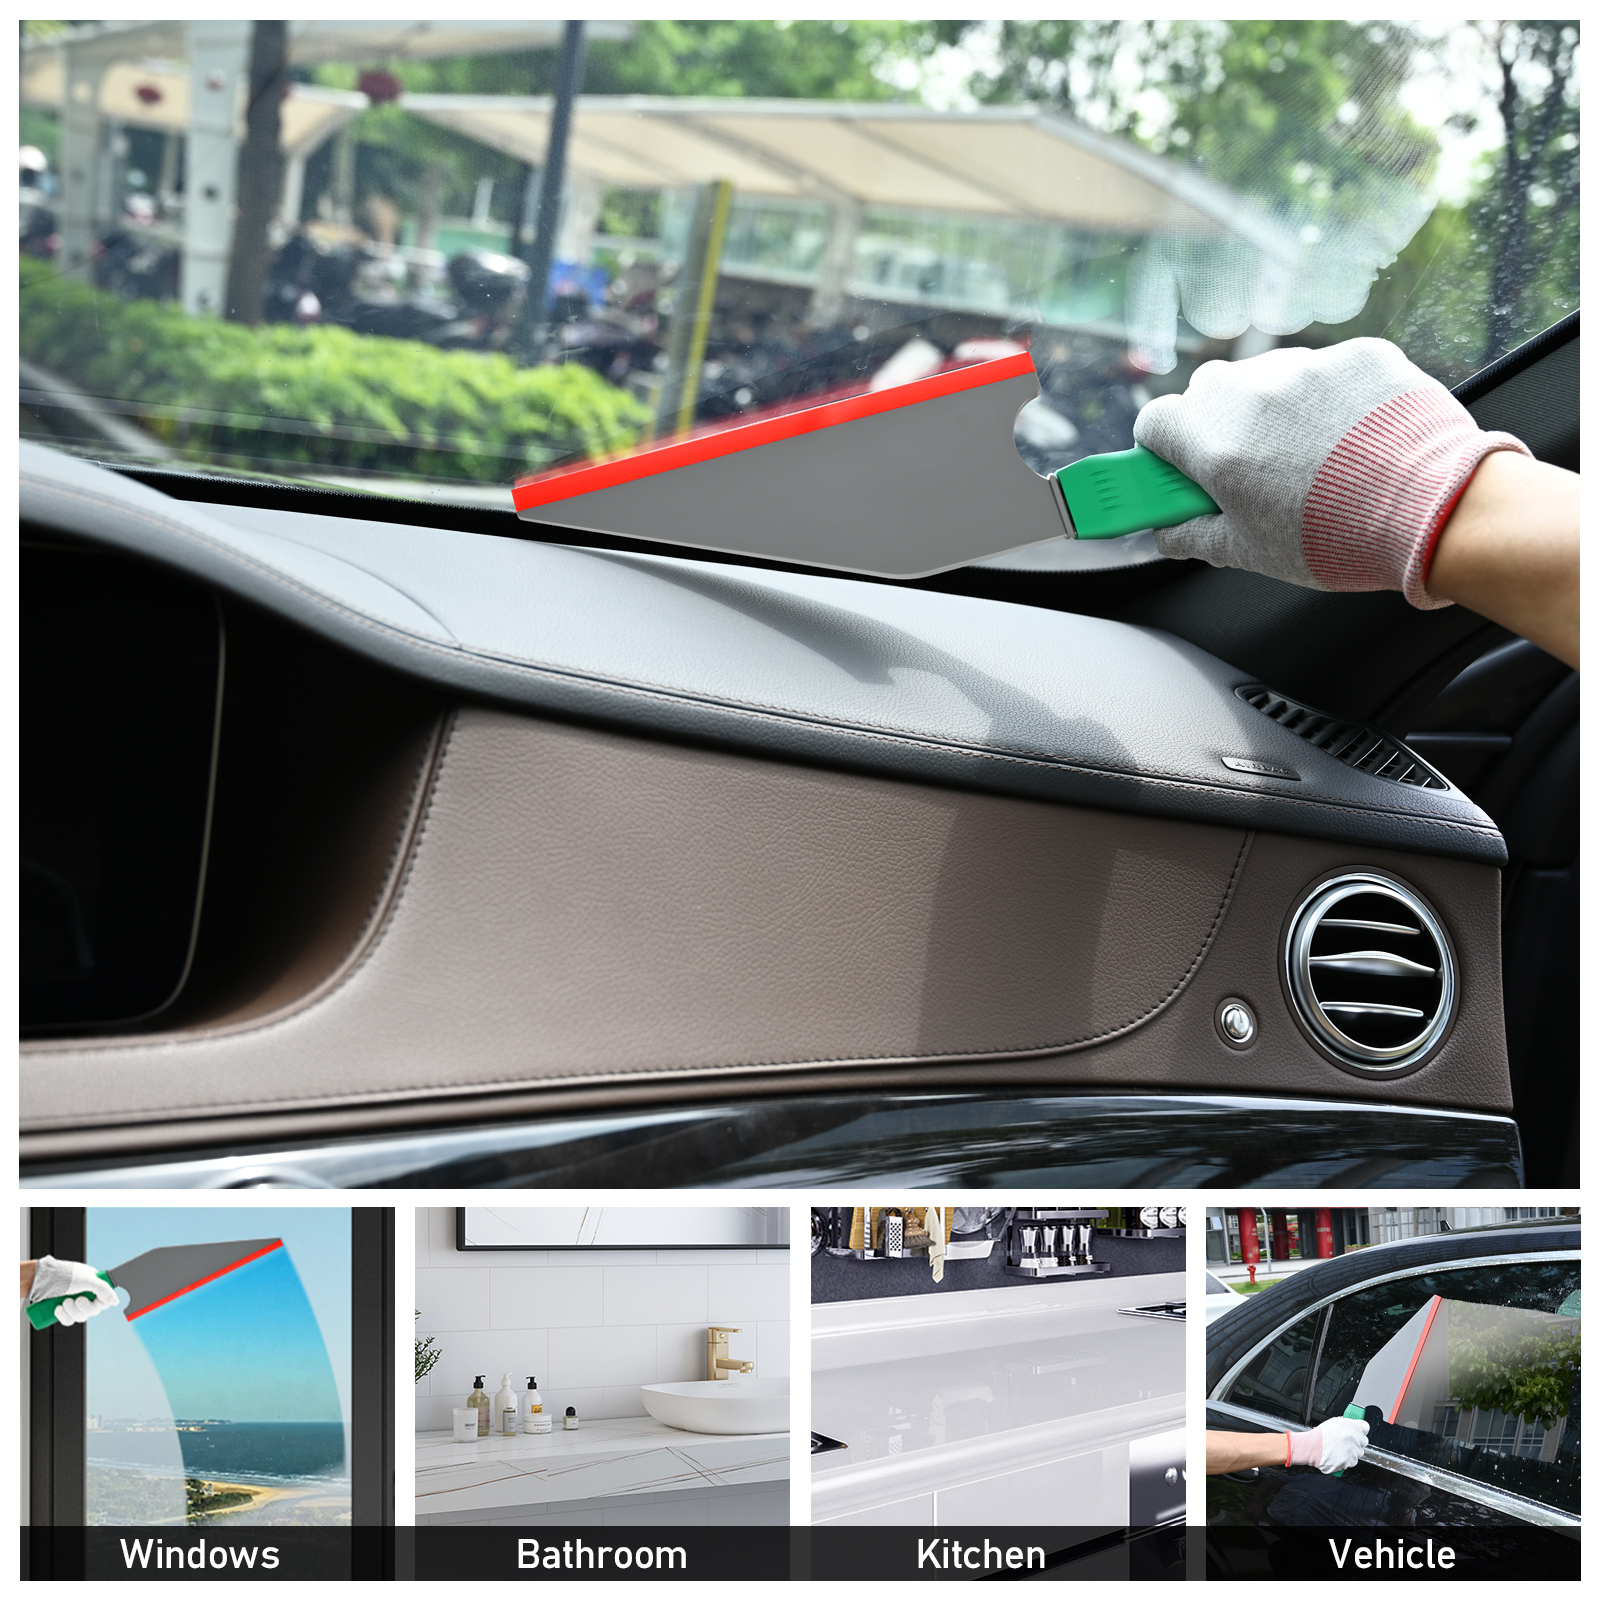 FOSHIO Handle Squeegee Vinyl Wrap Car Window Glass Tint Water Wiper